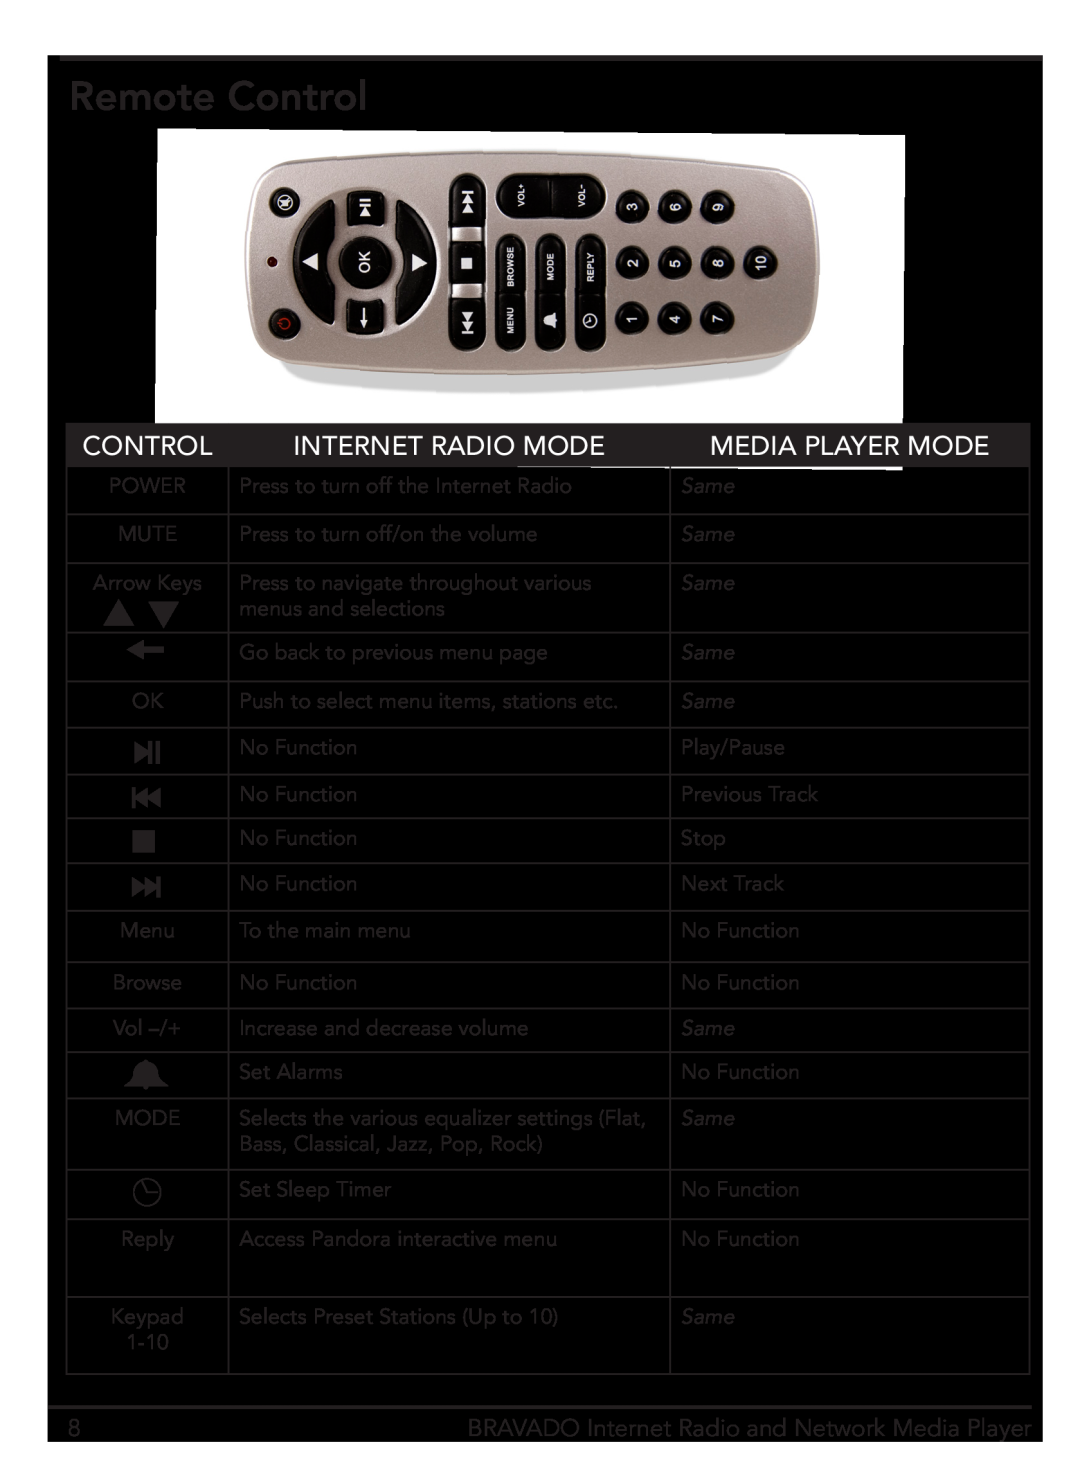 Grace GDI-IRD4400M Remote Control, Internet Radio Mode, Media Player Mode, BRAVADO Internet Radio and Network Media Player 